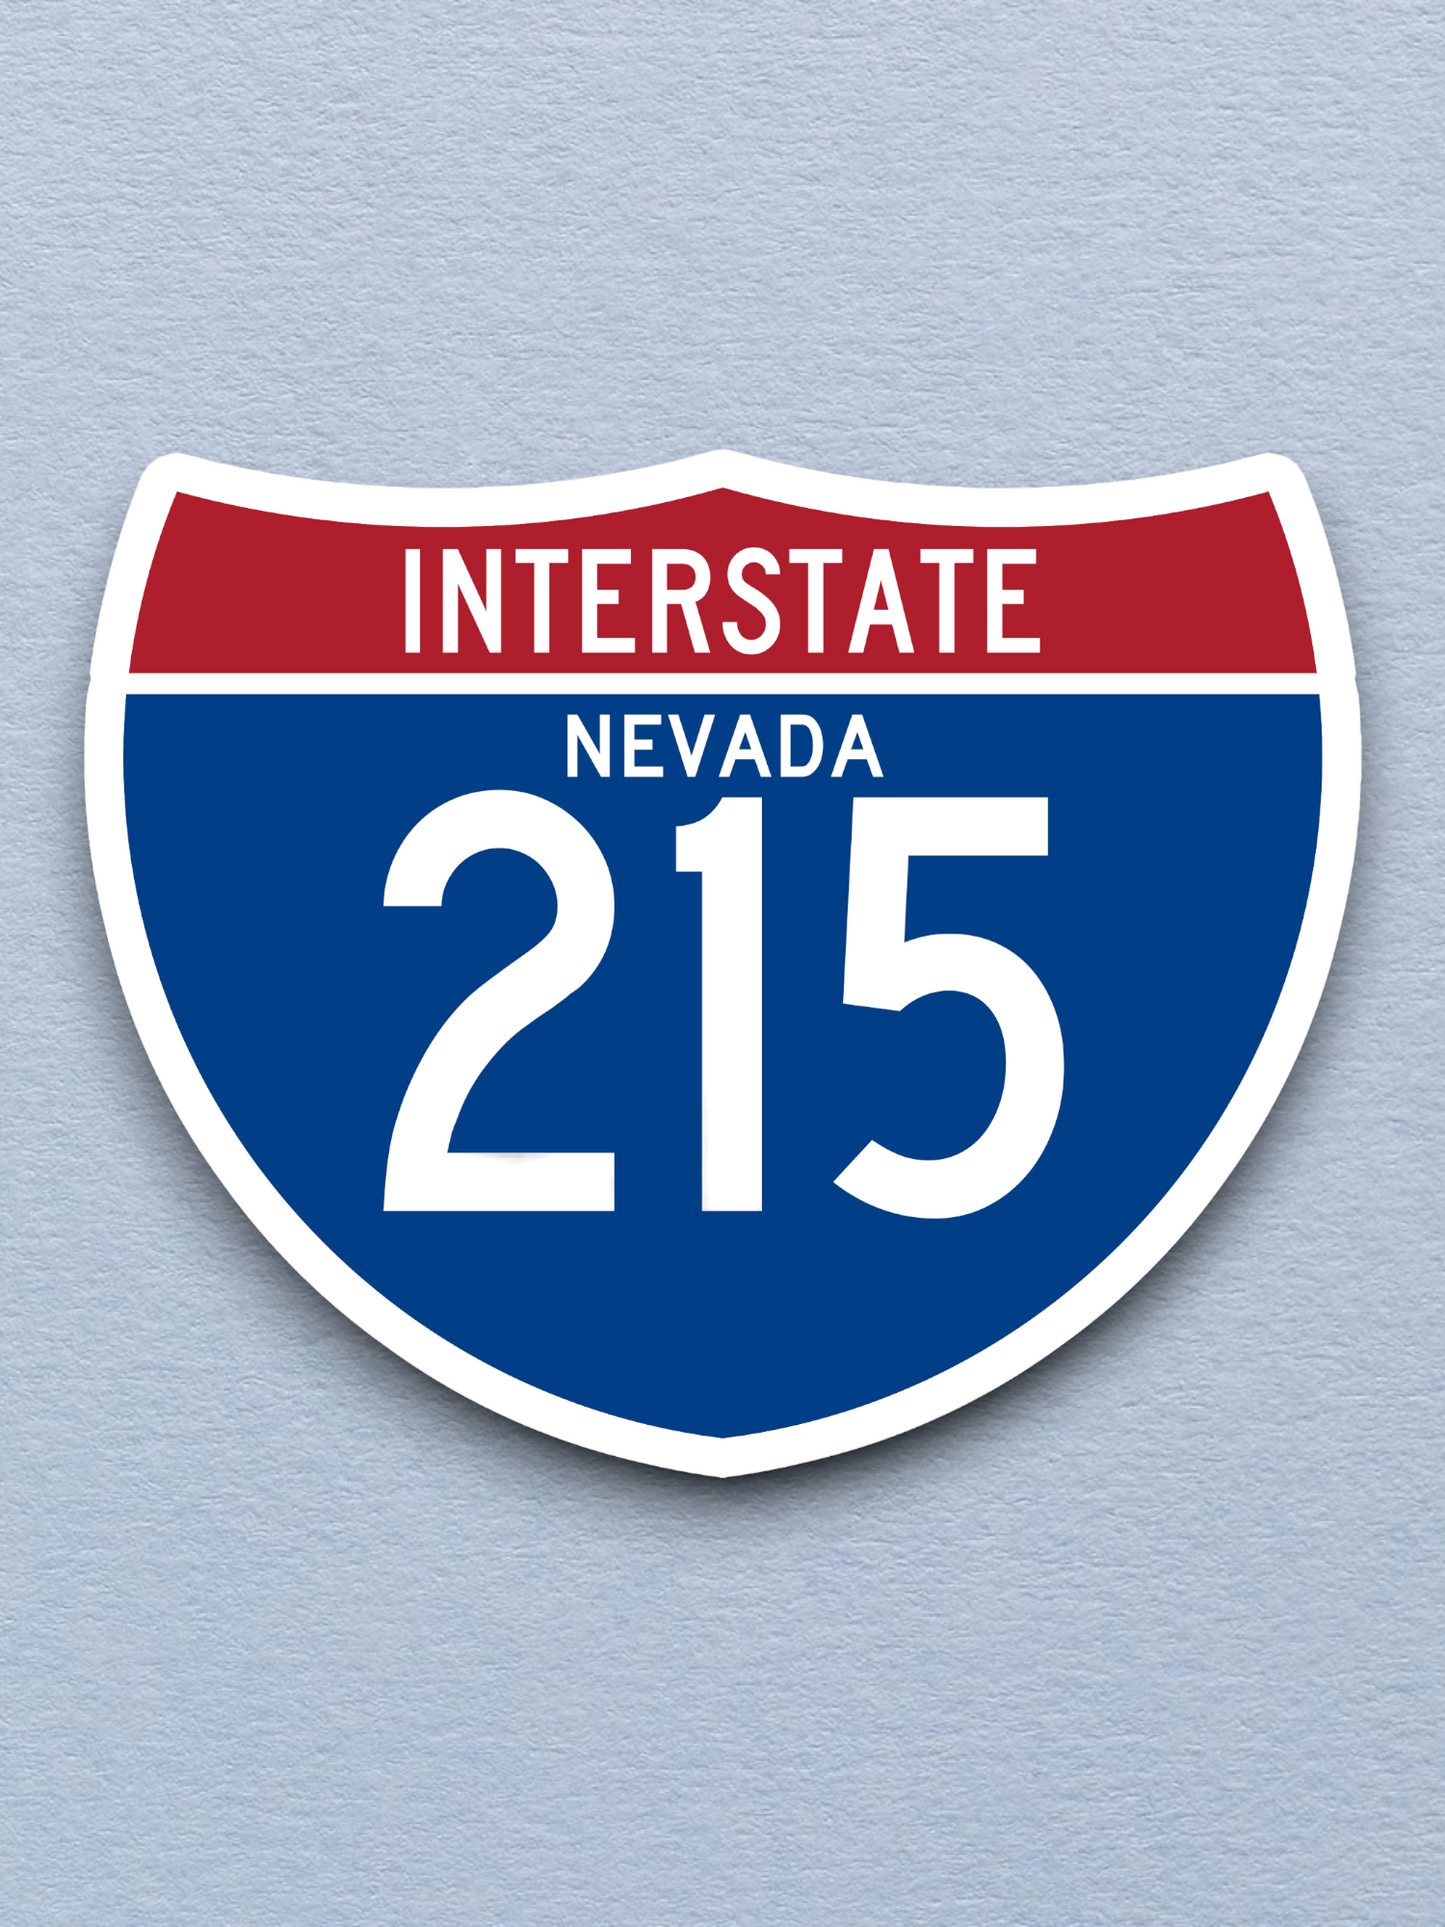 Interstate I-215 Nevada Sticker